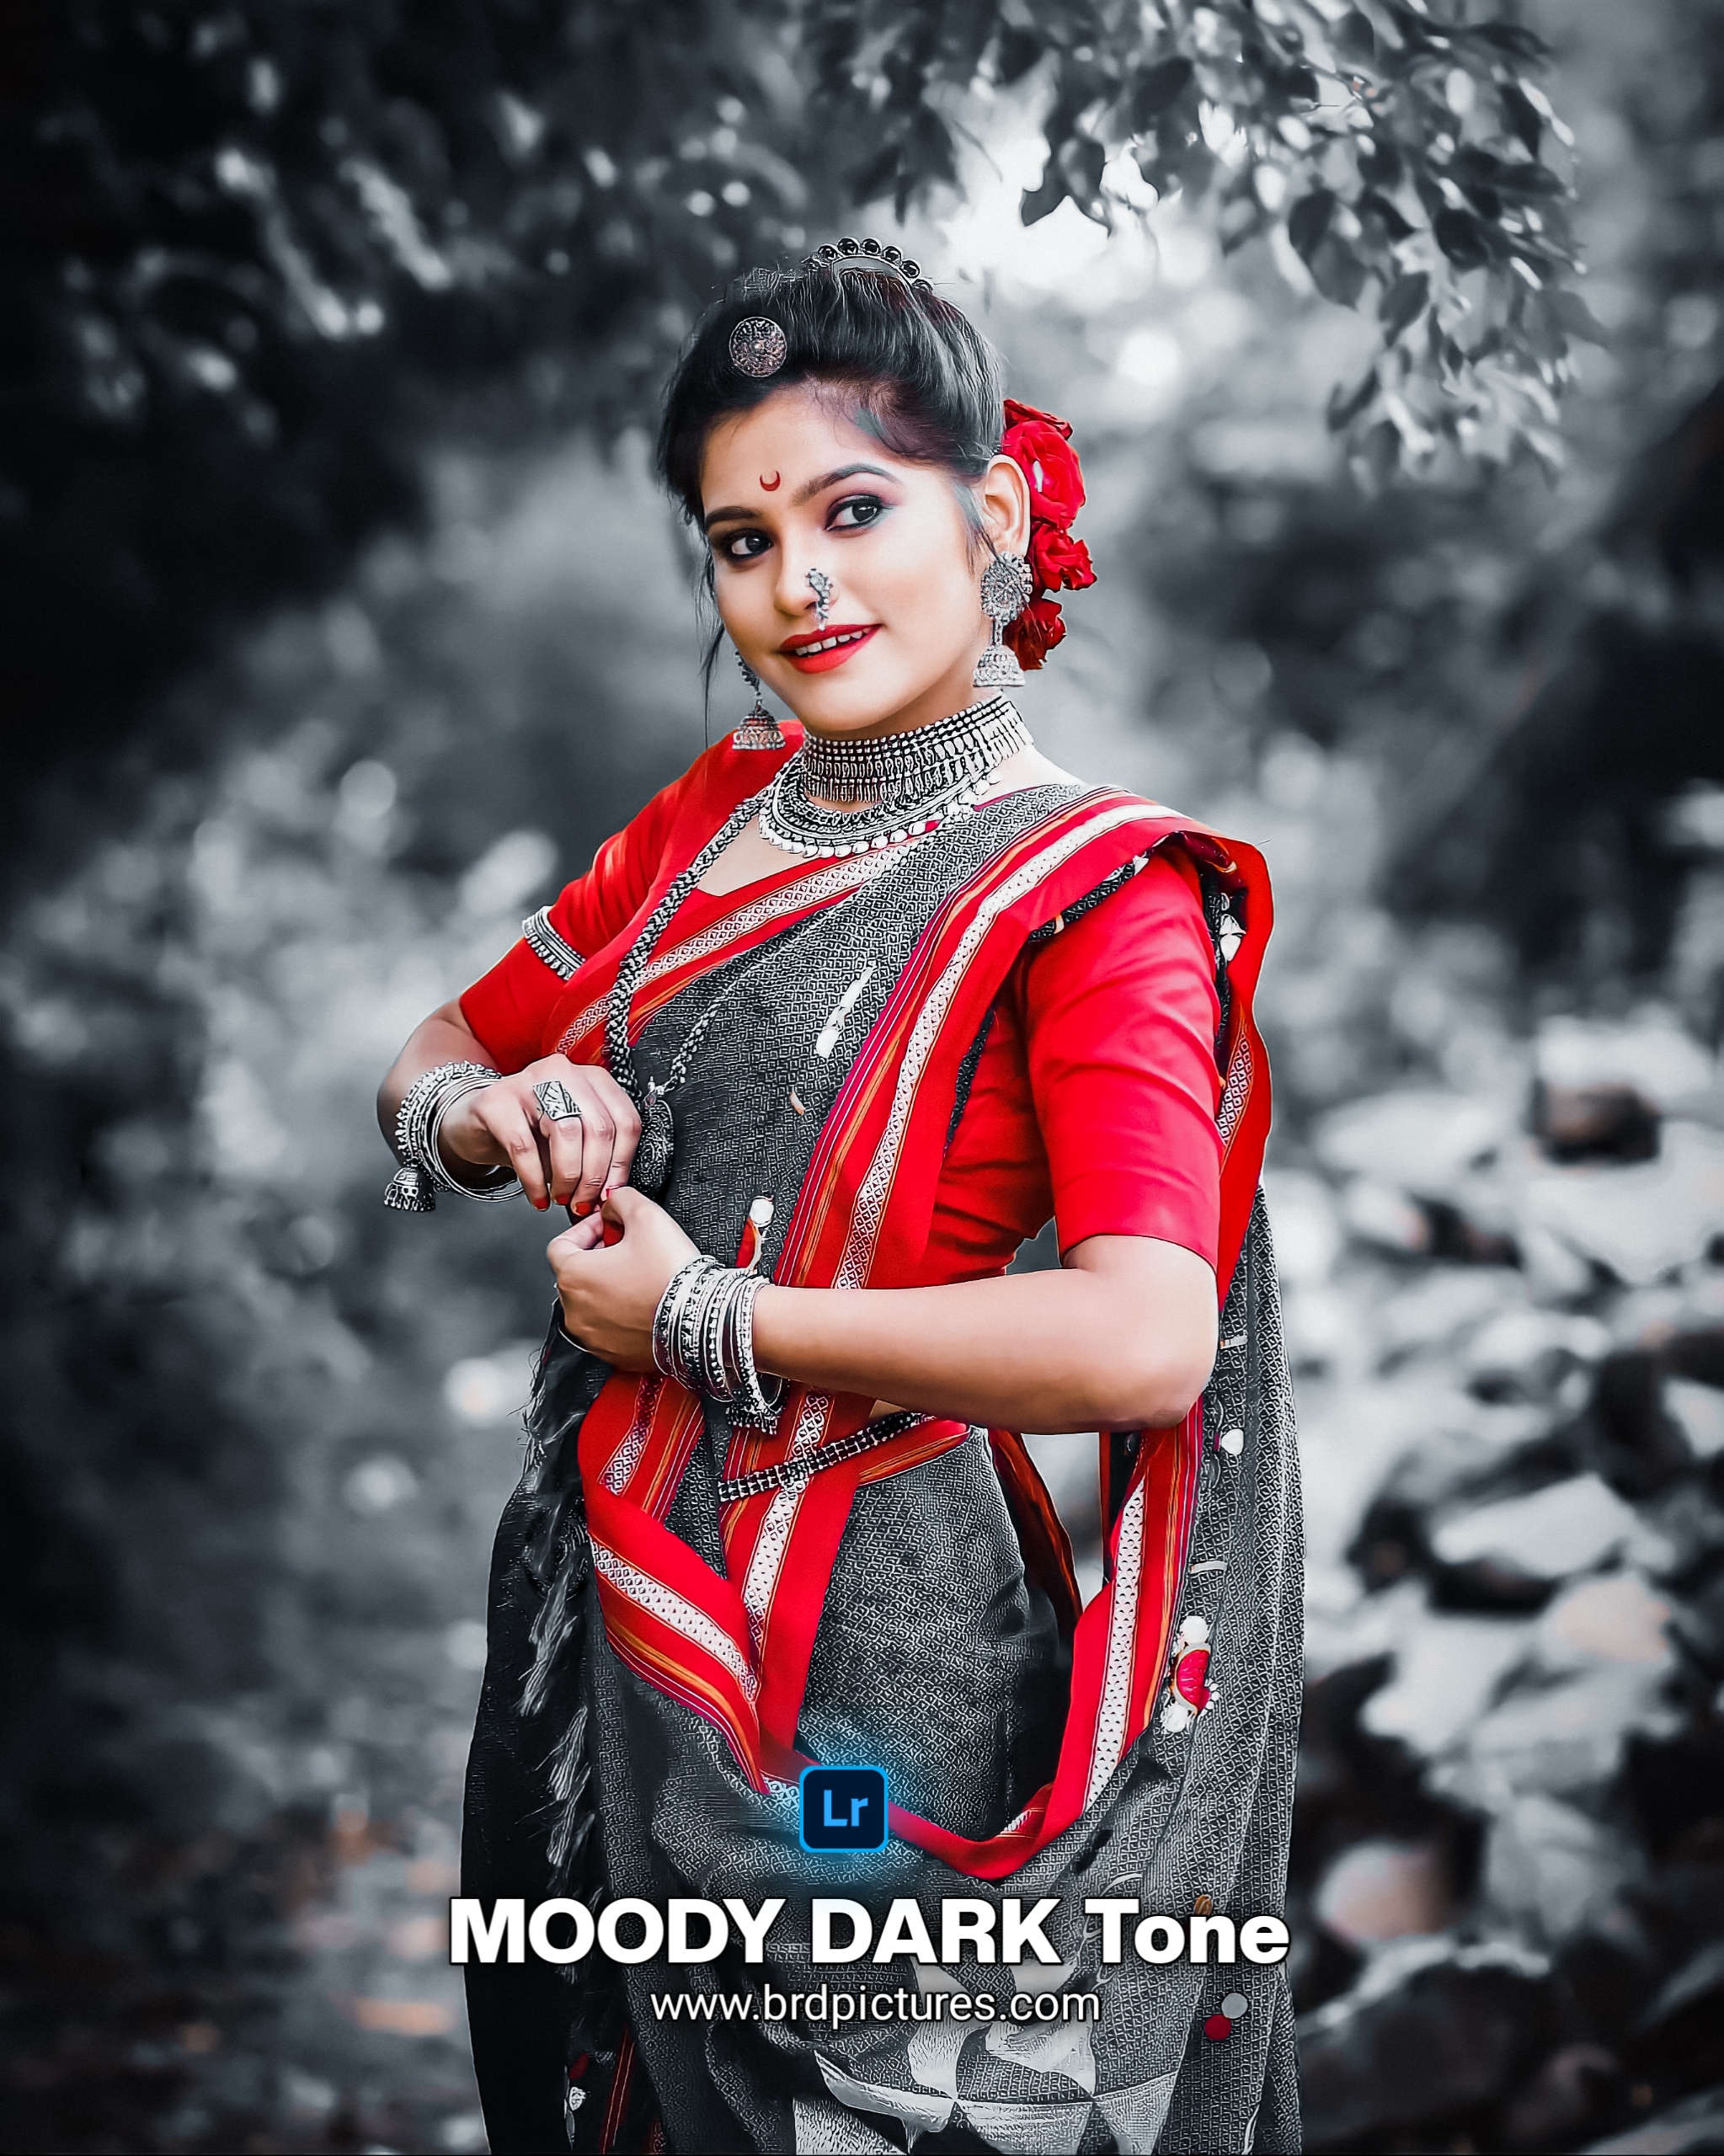 Moody dark tone lightroom mobile preset free download